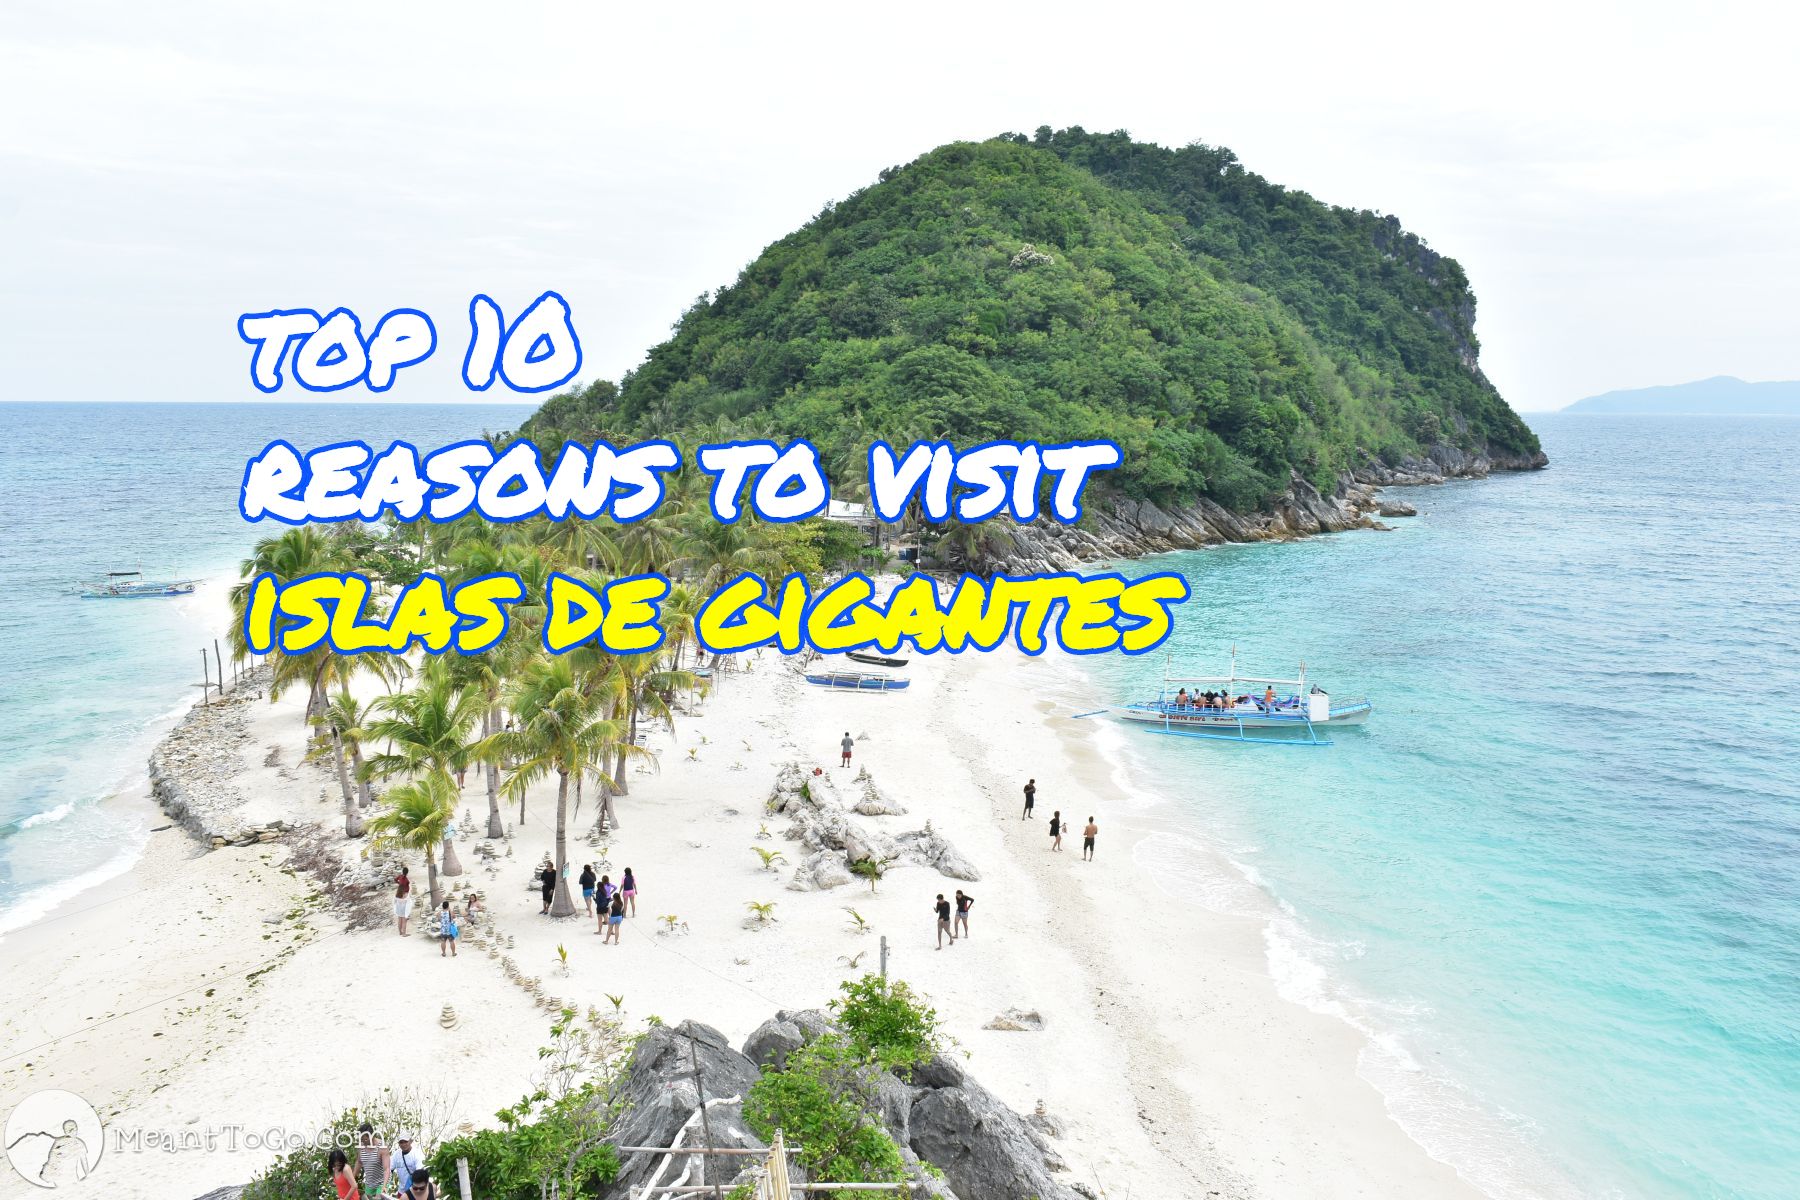 Top 10 reasons why you should visit Islas de Gigantes